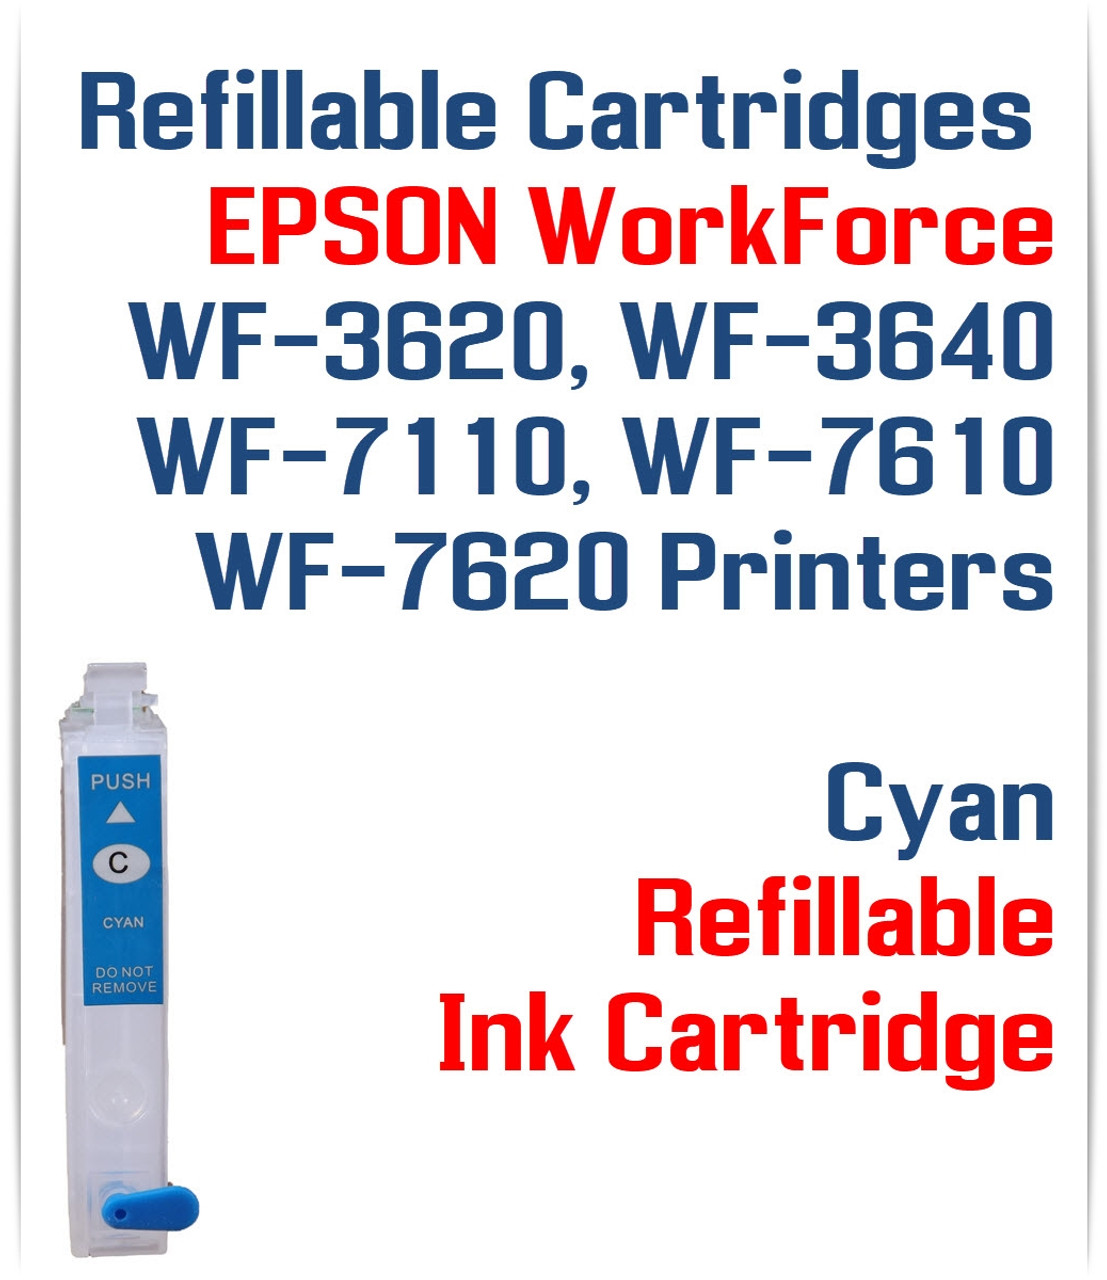 Cyan Refillable Ink Cartridge (empty) Epson WorkForce WF-3640 WF-7110, WF-7610, WF-7620 Printers